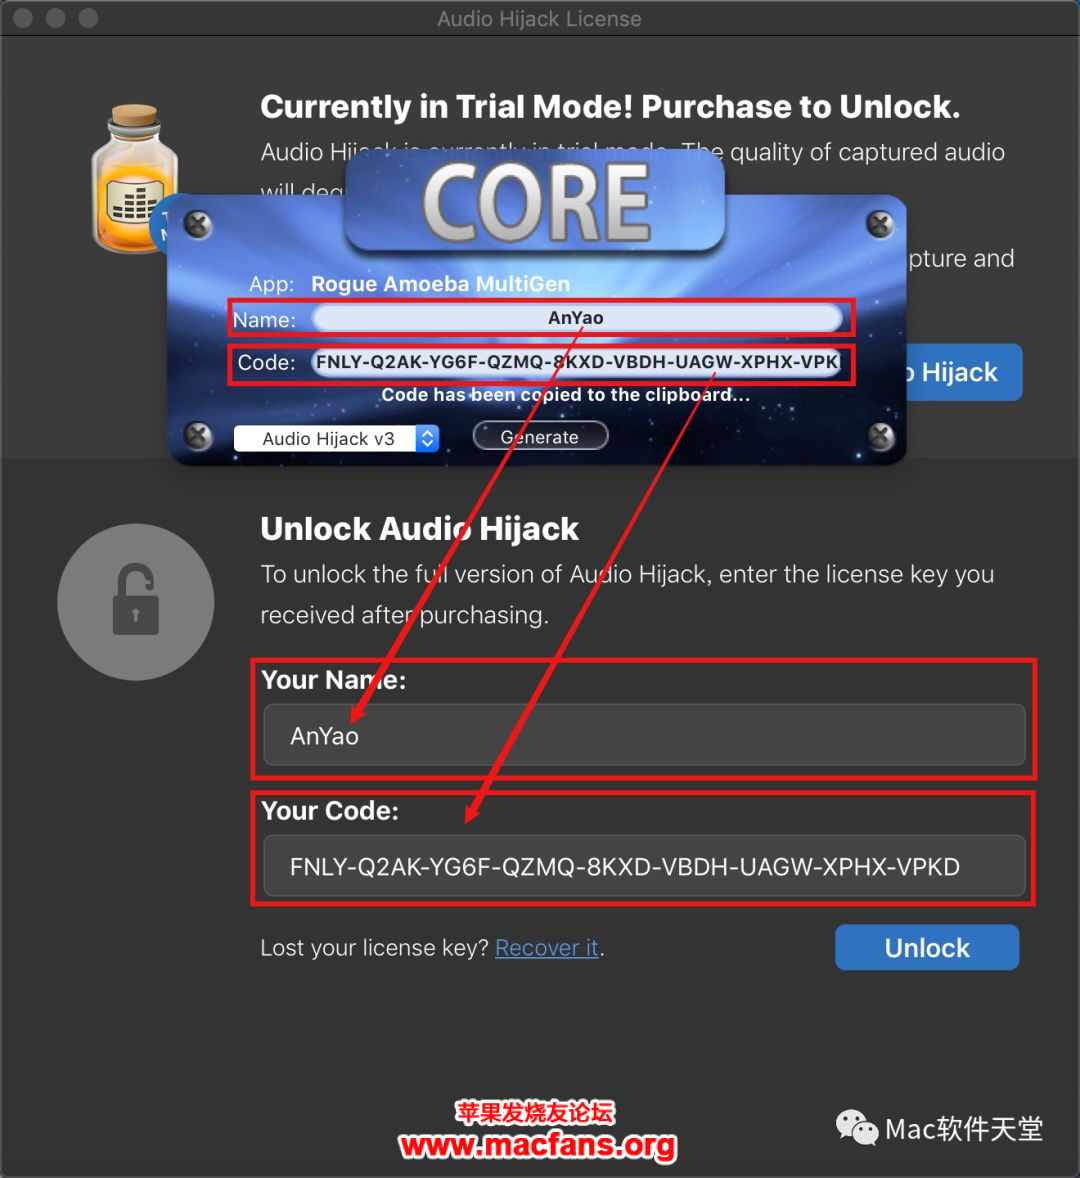 Audio Hijack 3.7.5 Crack MAC License Key Keygen Free Download